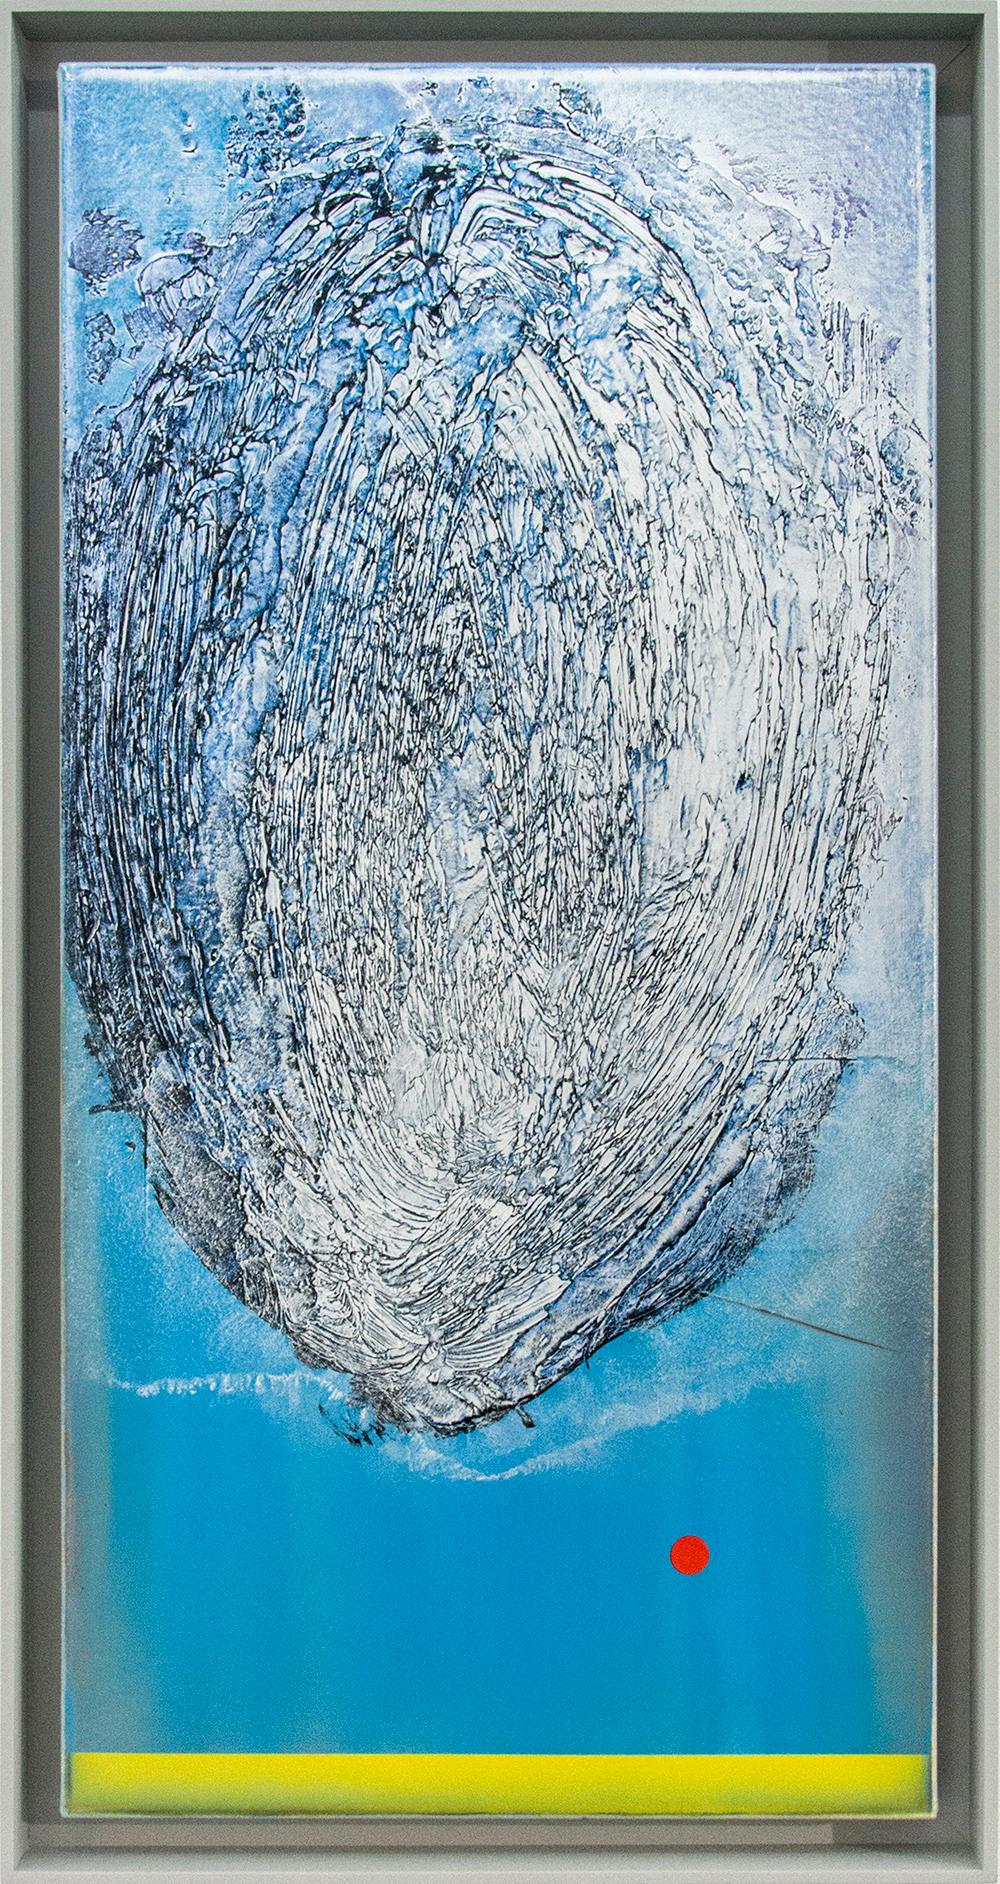 « Becoming 1 » - bleu, vert, argent, abstrait irisé, acrylique sur toile - Mixed Media Art de Alice Teichert